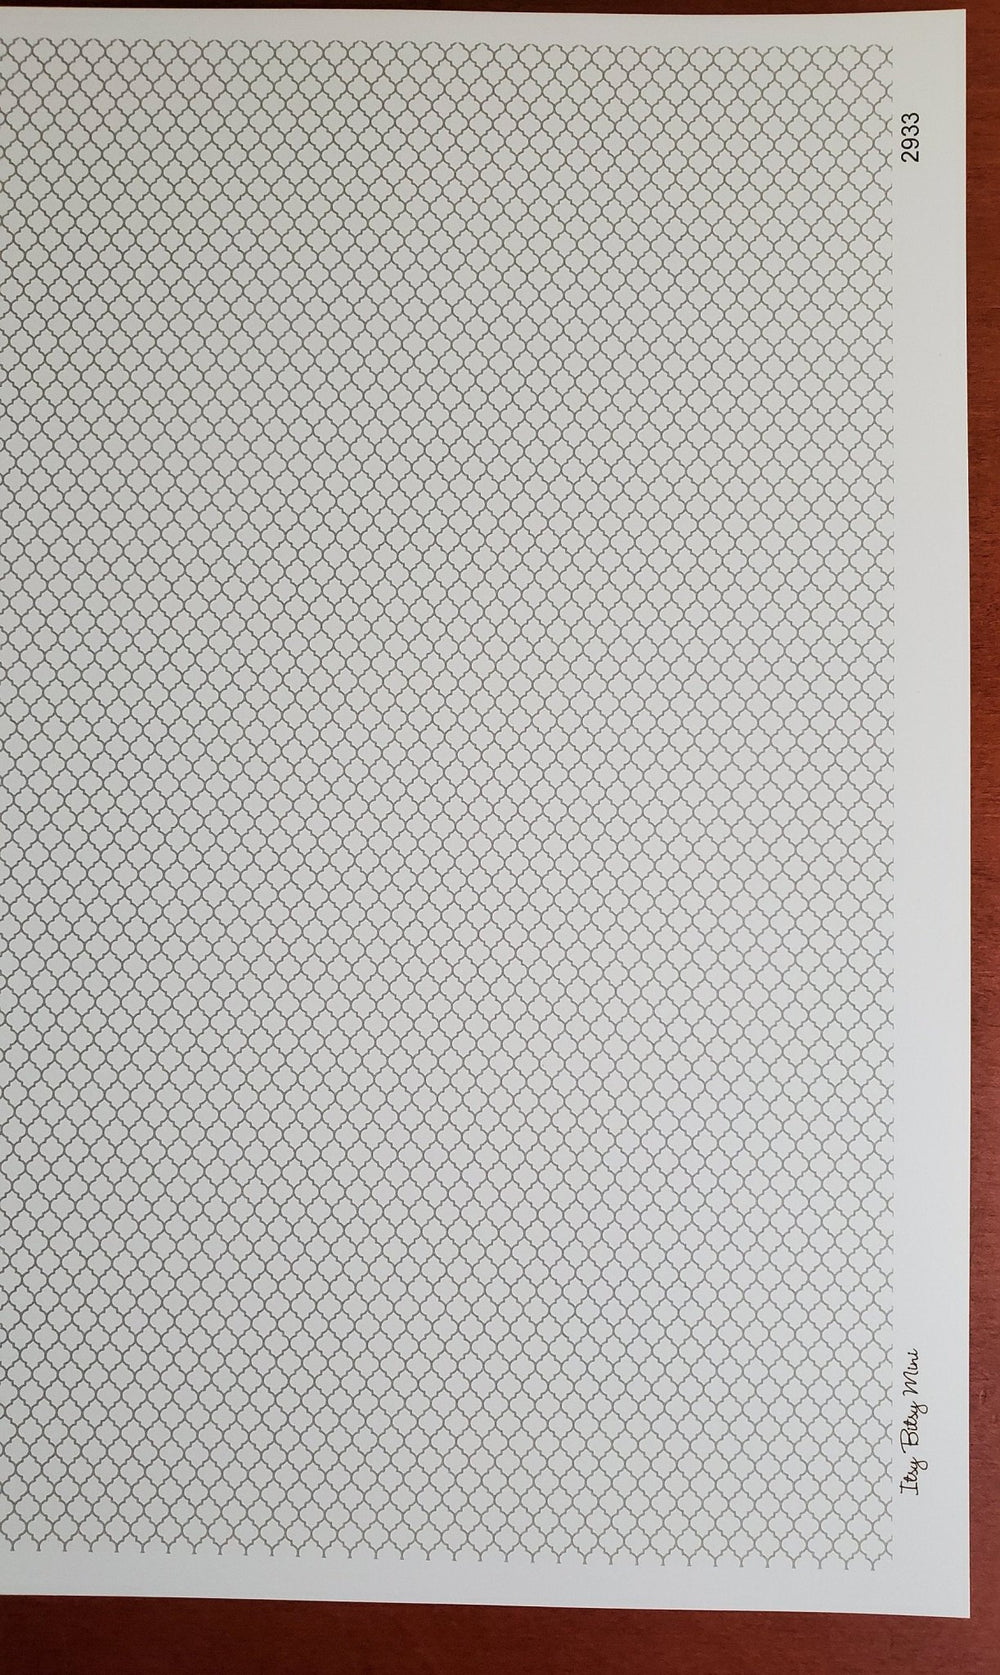 Dollhouse Tile Wallpaper or Flooring Trellis White Gray 1:12 Scale Itsy Bitsy Miniature - Miniature Crush